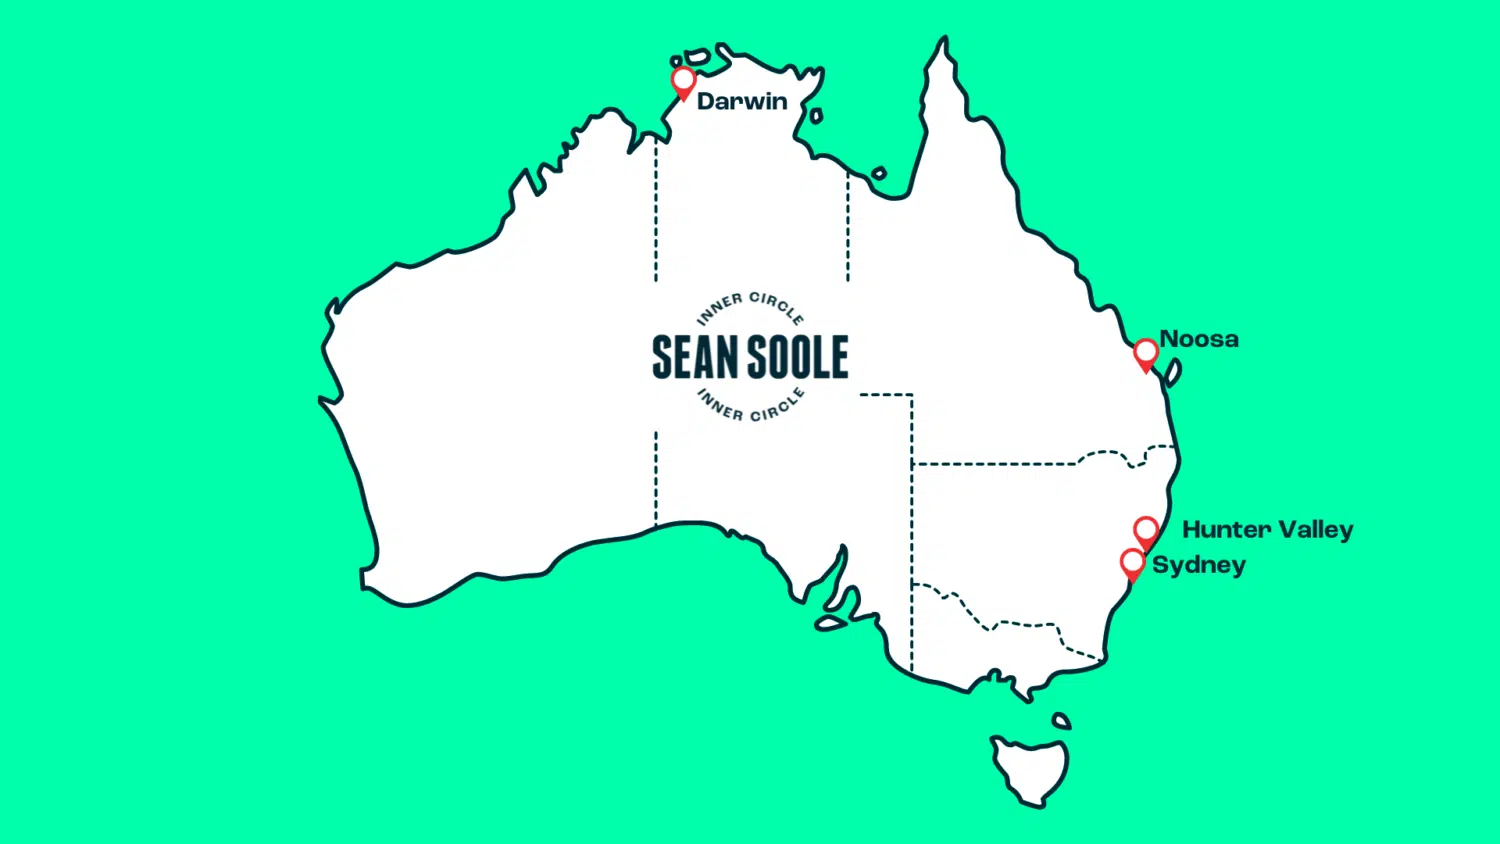 Inner Circle Events across Australia